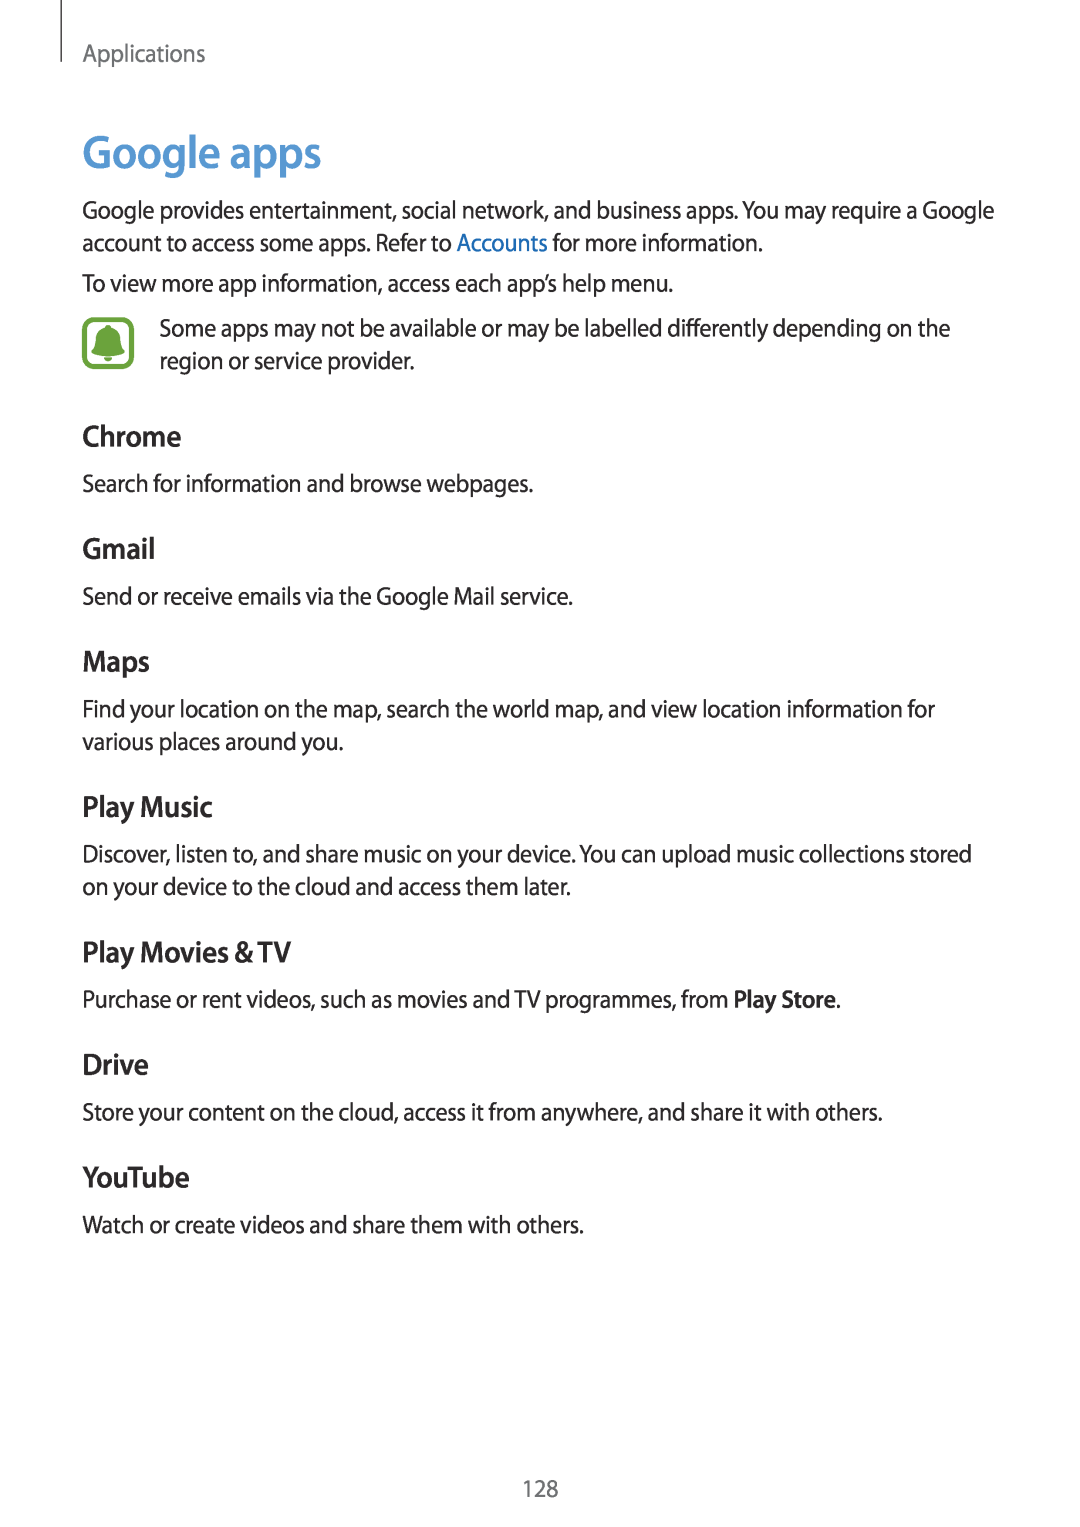 Samsung SM-G928FZKACYO manual Google apps, Chrome, Gmail, Maps, Play Music, Play Movies & TV, Drive, YouTube, Applications 